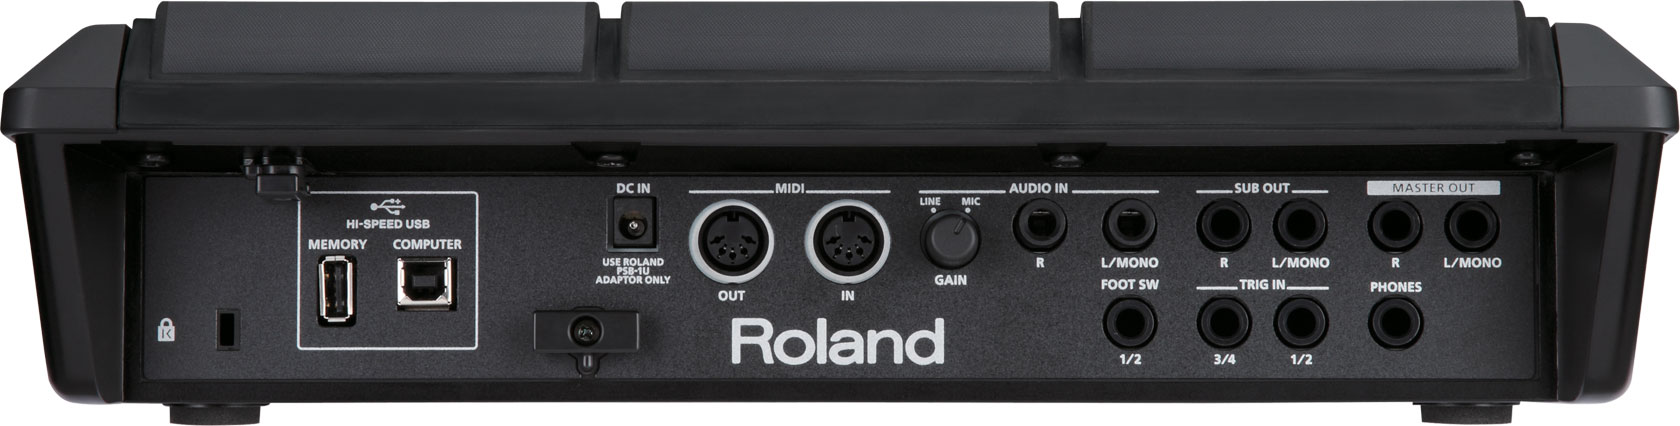 ROLAND SPDSX CAMPIONATORE A PADS MIDI USB SPD-SX SAMPLING PAD BATTERIA ELETTRONICA 2